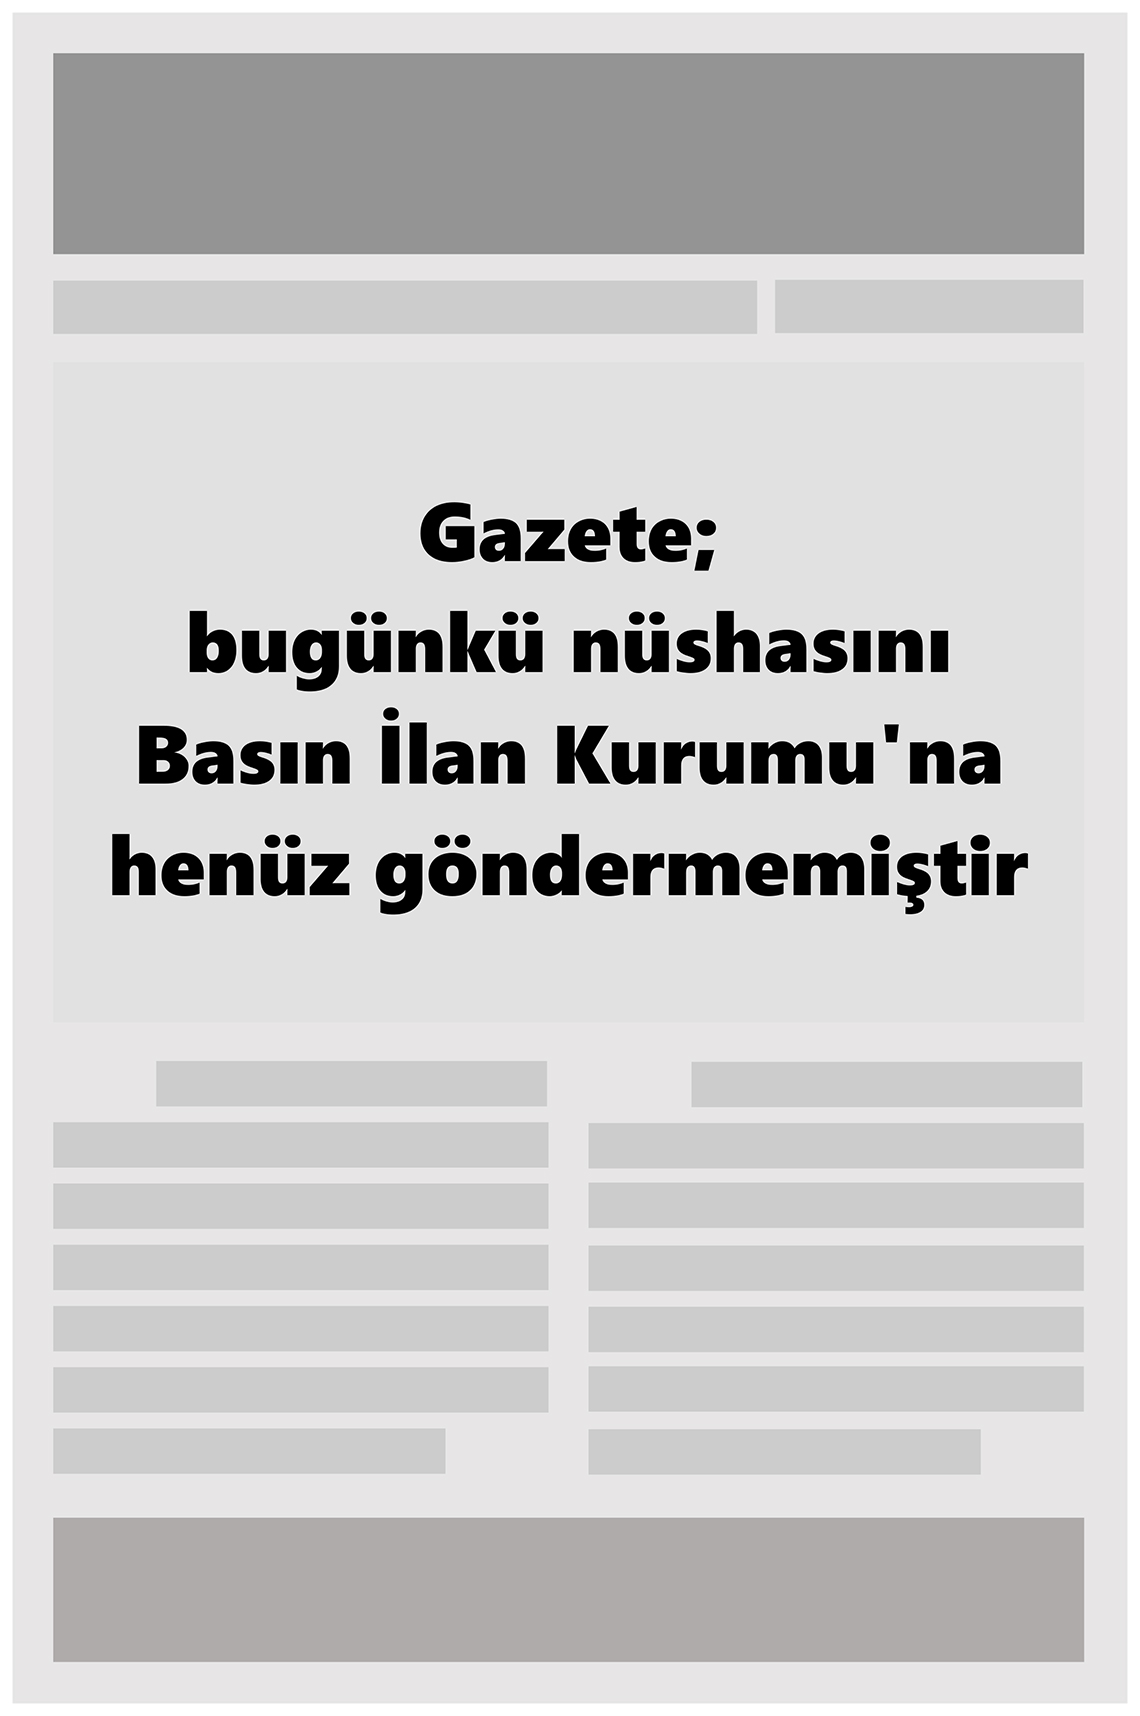 25 Eylül 2022 Gaziantep Sabah Gazete Manşeti